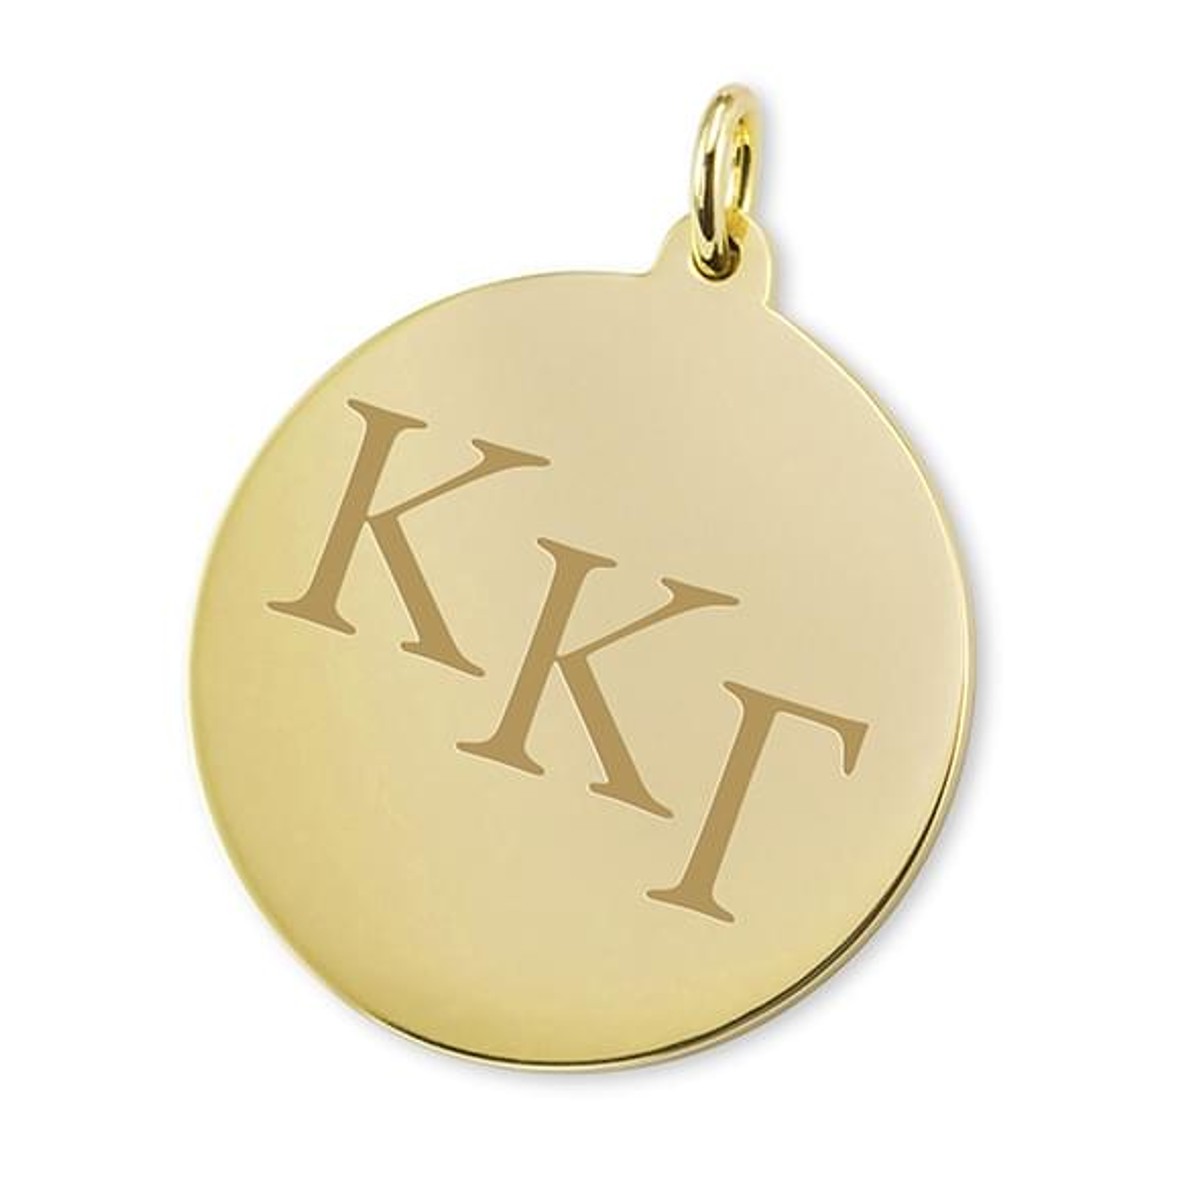 Kappa Kappa Gamma 14K Gold Individual Charm